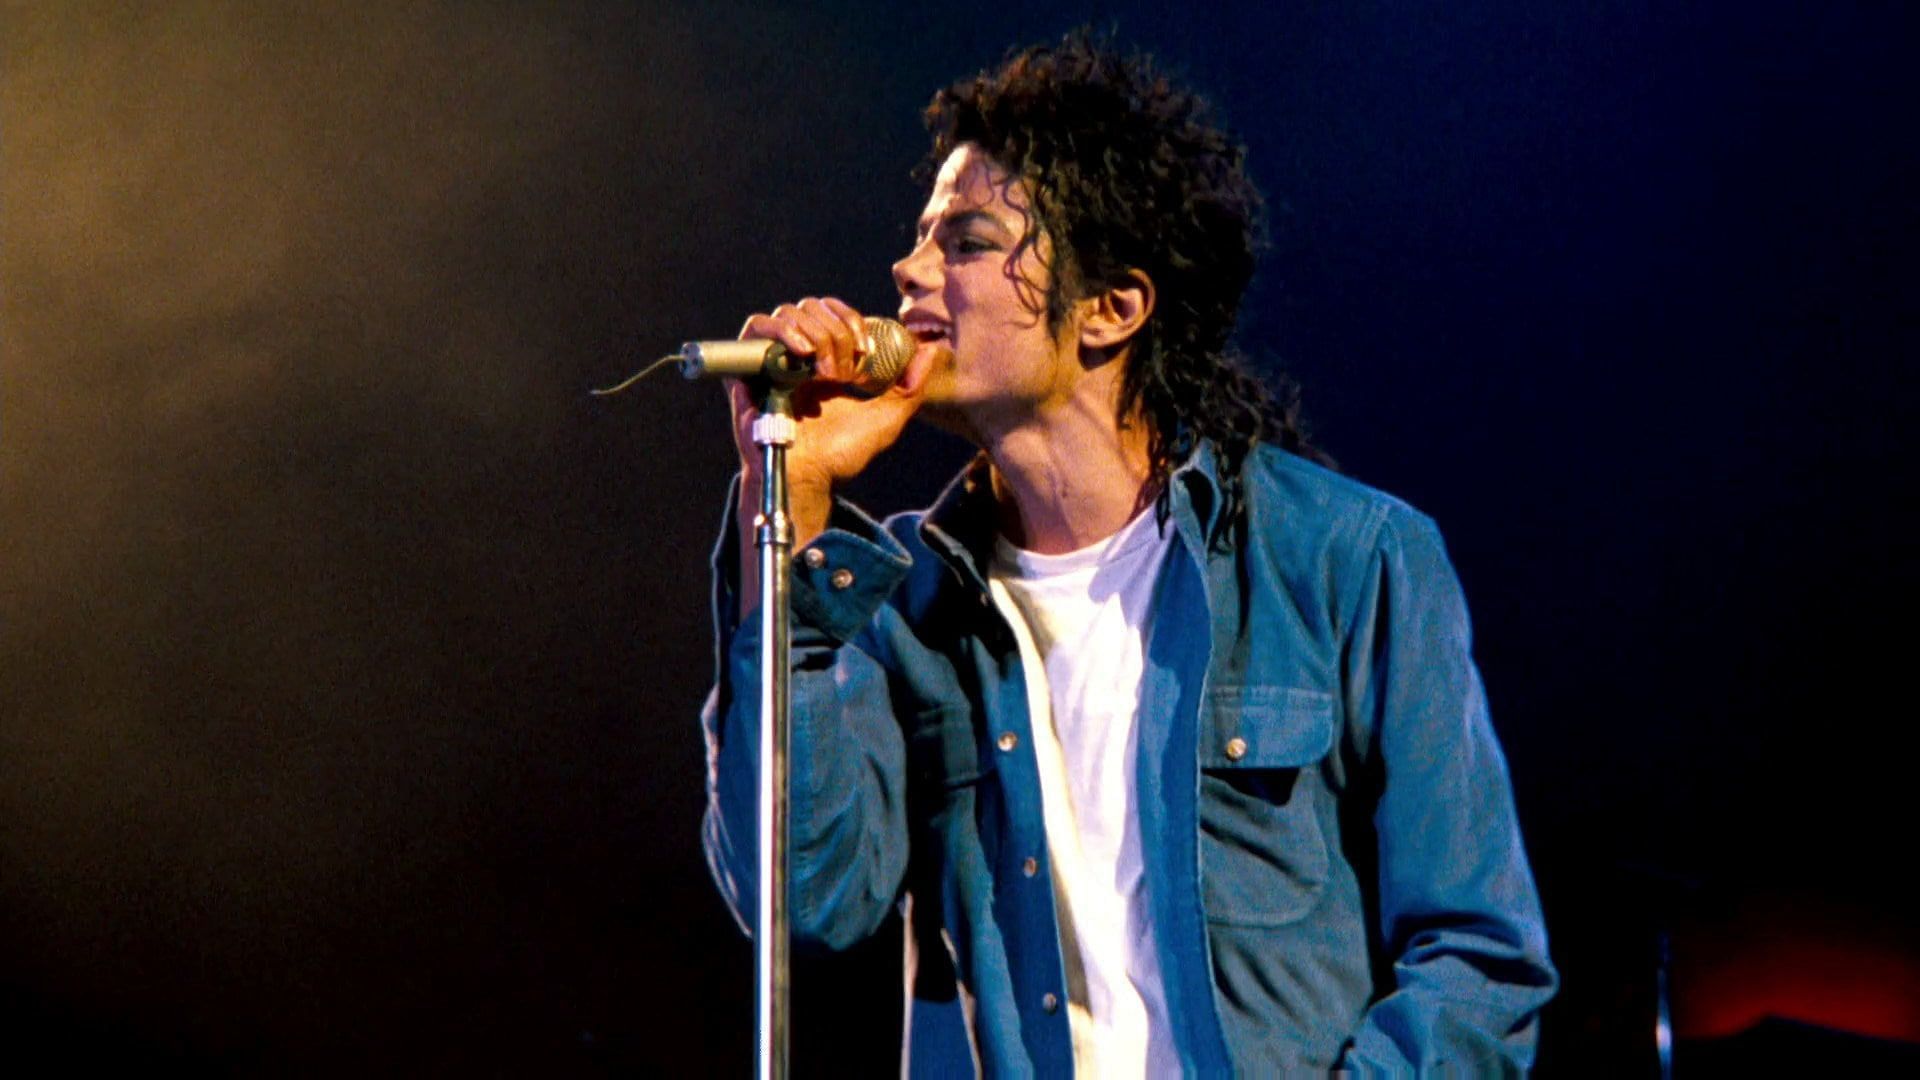 Legend and music icon Michael Jackson. (Image via Wallpaperflare.com)